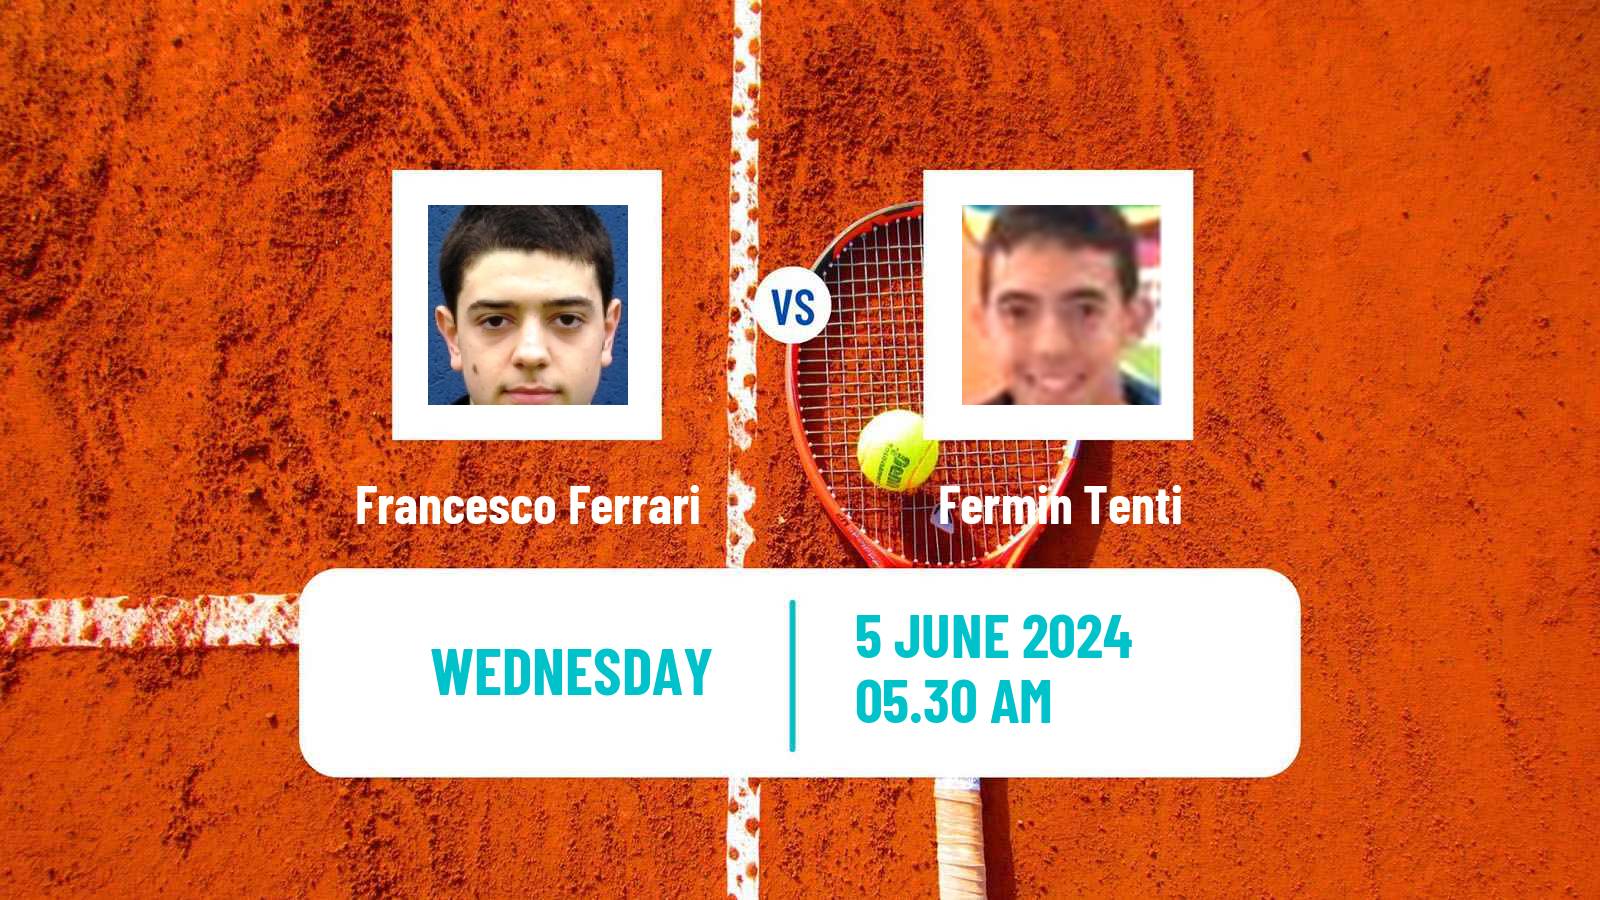 Tennis ITF M15 Grodzisk Mazowiecki Men Francesco Ferrari - Fermin Tenti